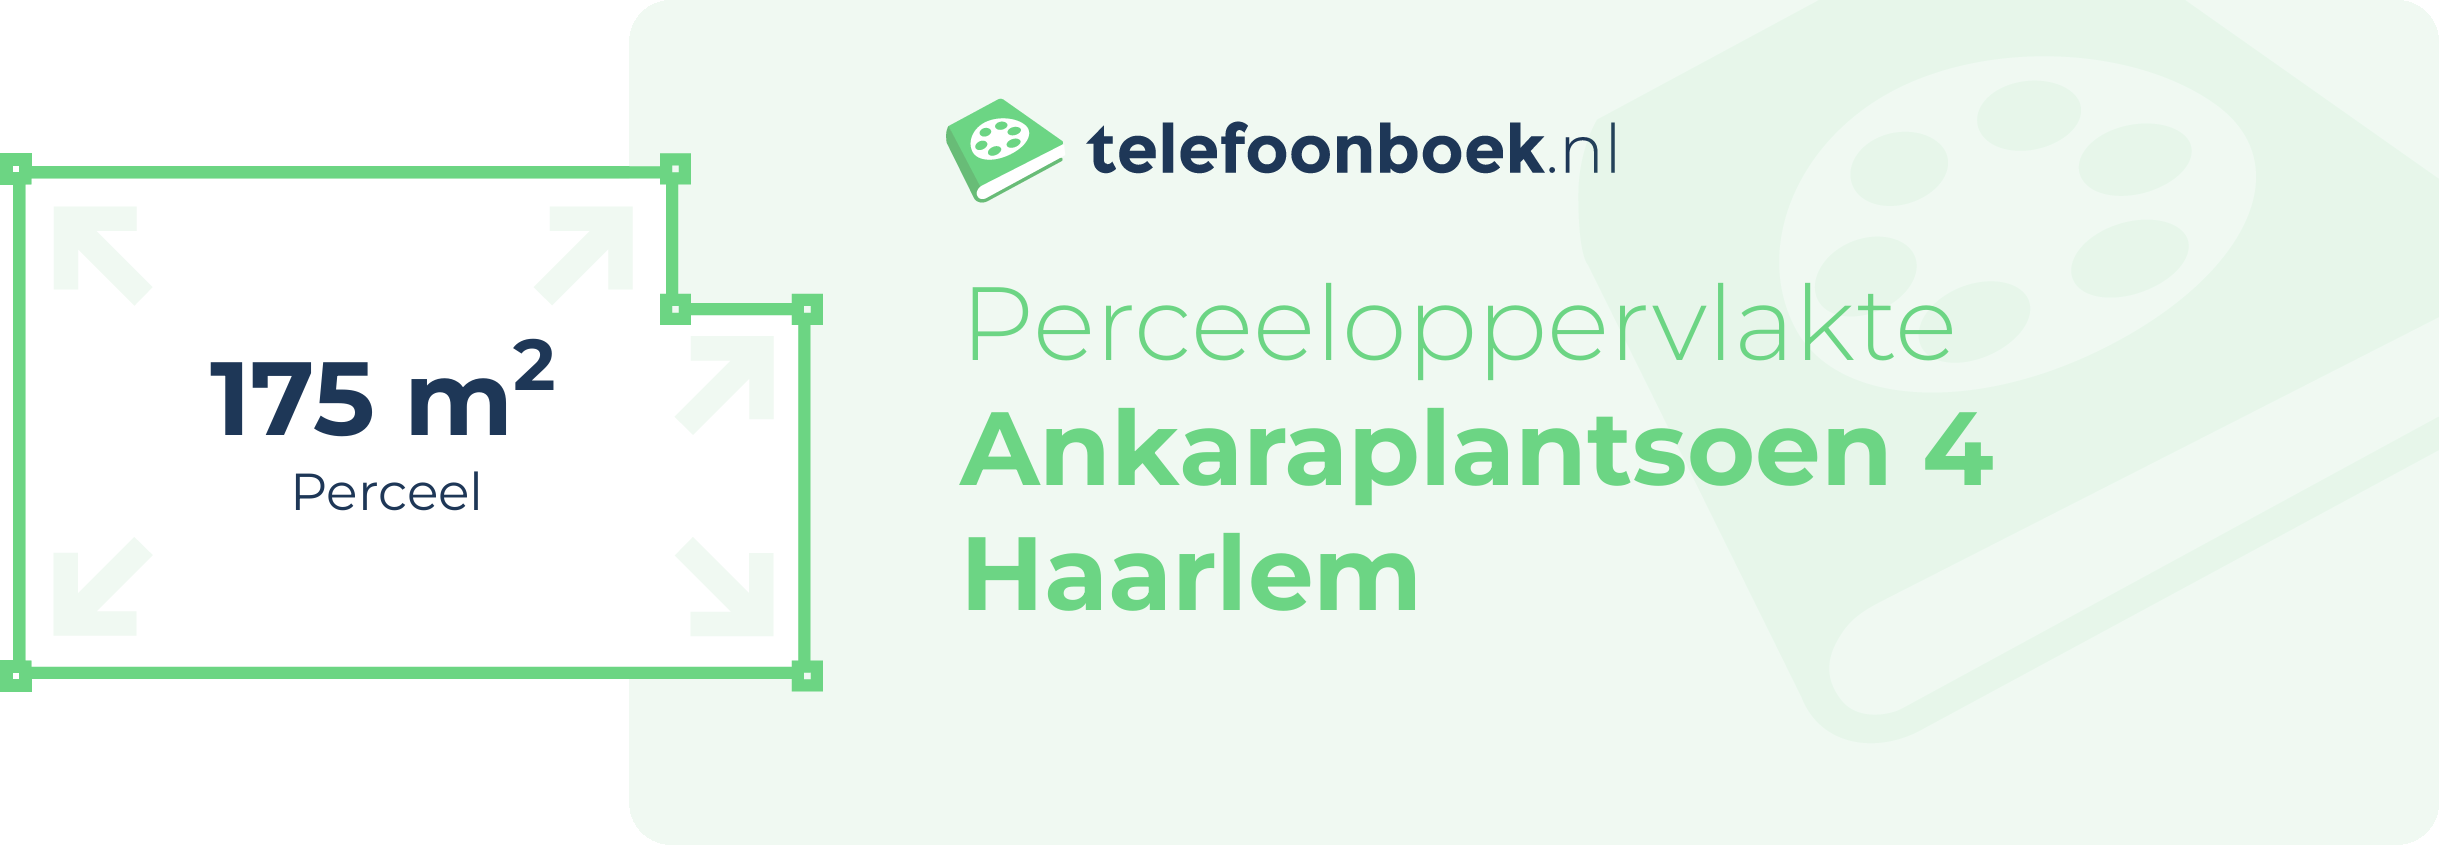 Perceeloppervlakte Ankaraplantsoen 4 Haarlem